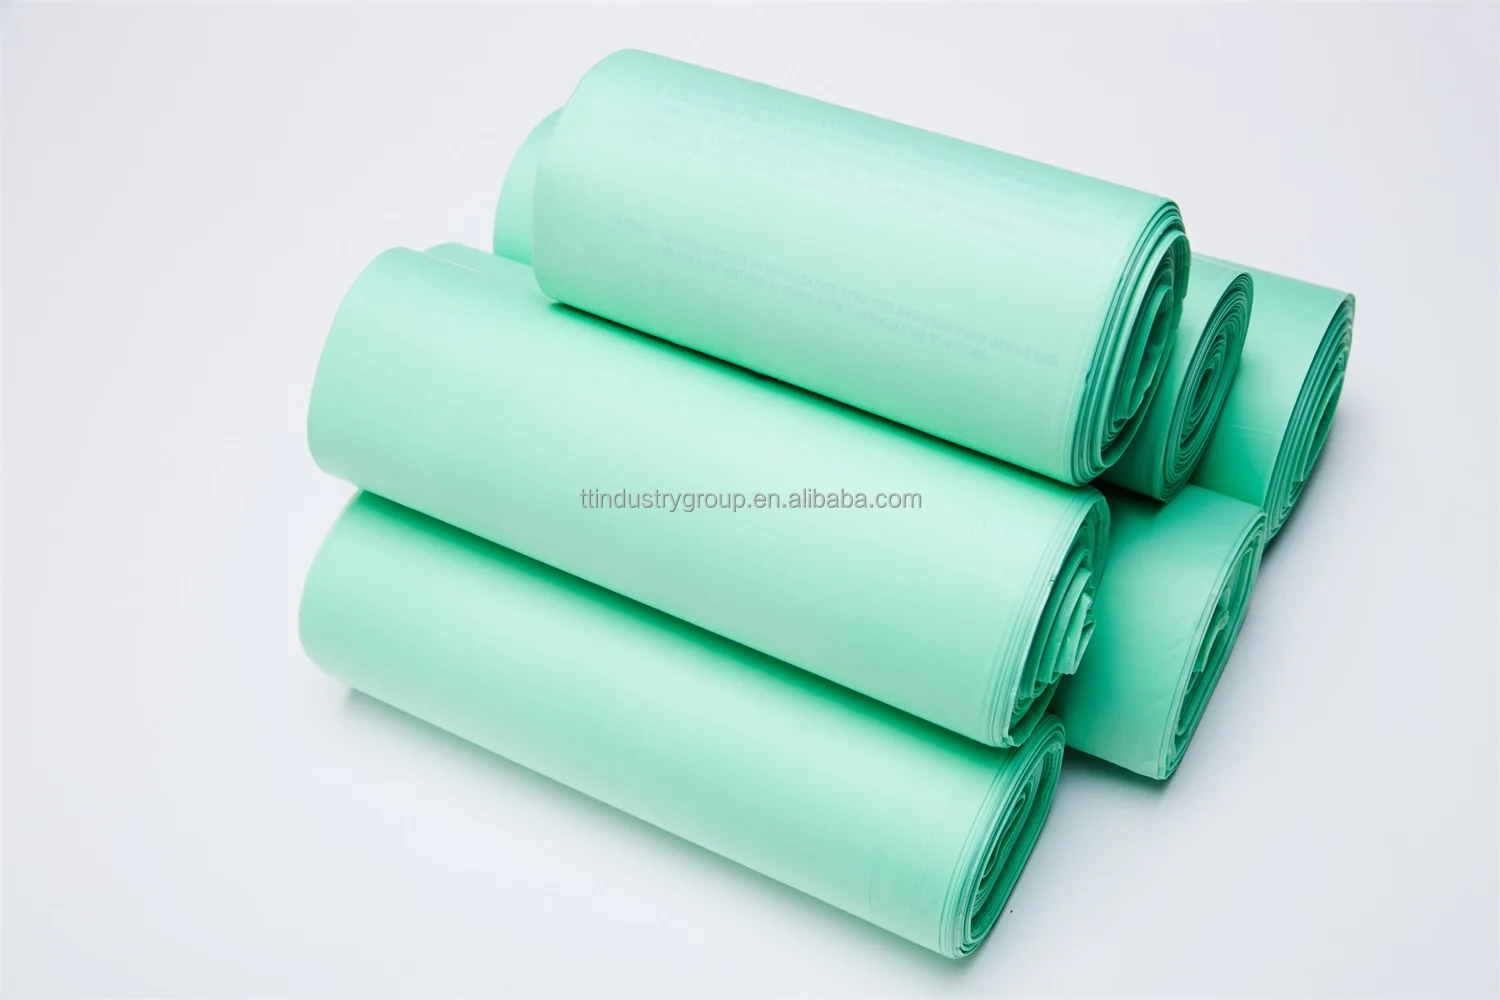 Thermoplastic starch (TPS): A green, biodegradable plastic - Kuraray